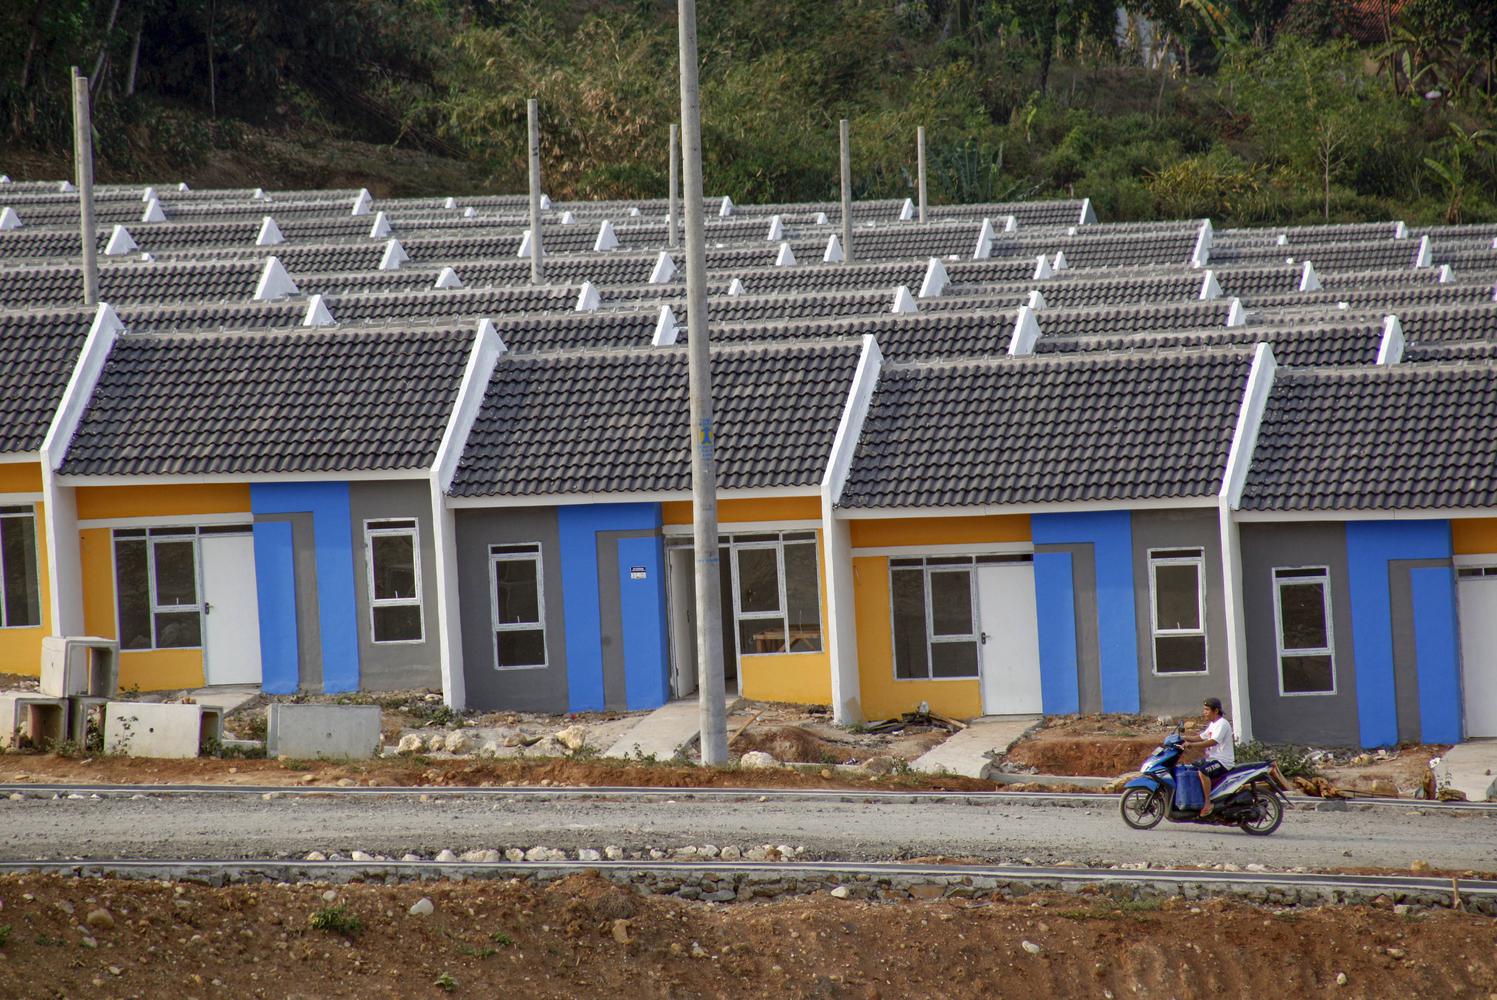 Warga berkendara di kawasan perumahan bersubsidi di kawasan Citeureup, Bogor, Jawa Barat, Senin (7/10/2019). Pemerintah memutuskan menambah anggaran untuk penyaluran rumah subsidi bagi Masyarakat Berpenghasilan Rendah (MBR) melalui skema Fasilitas Likuidi